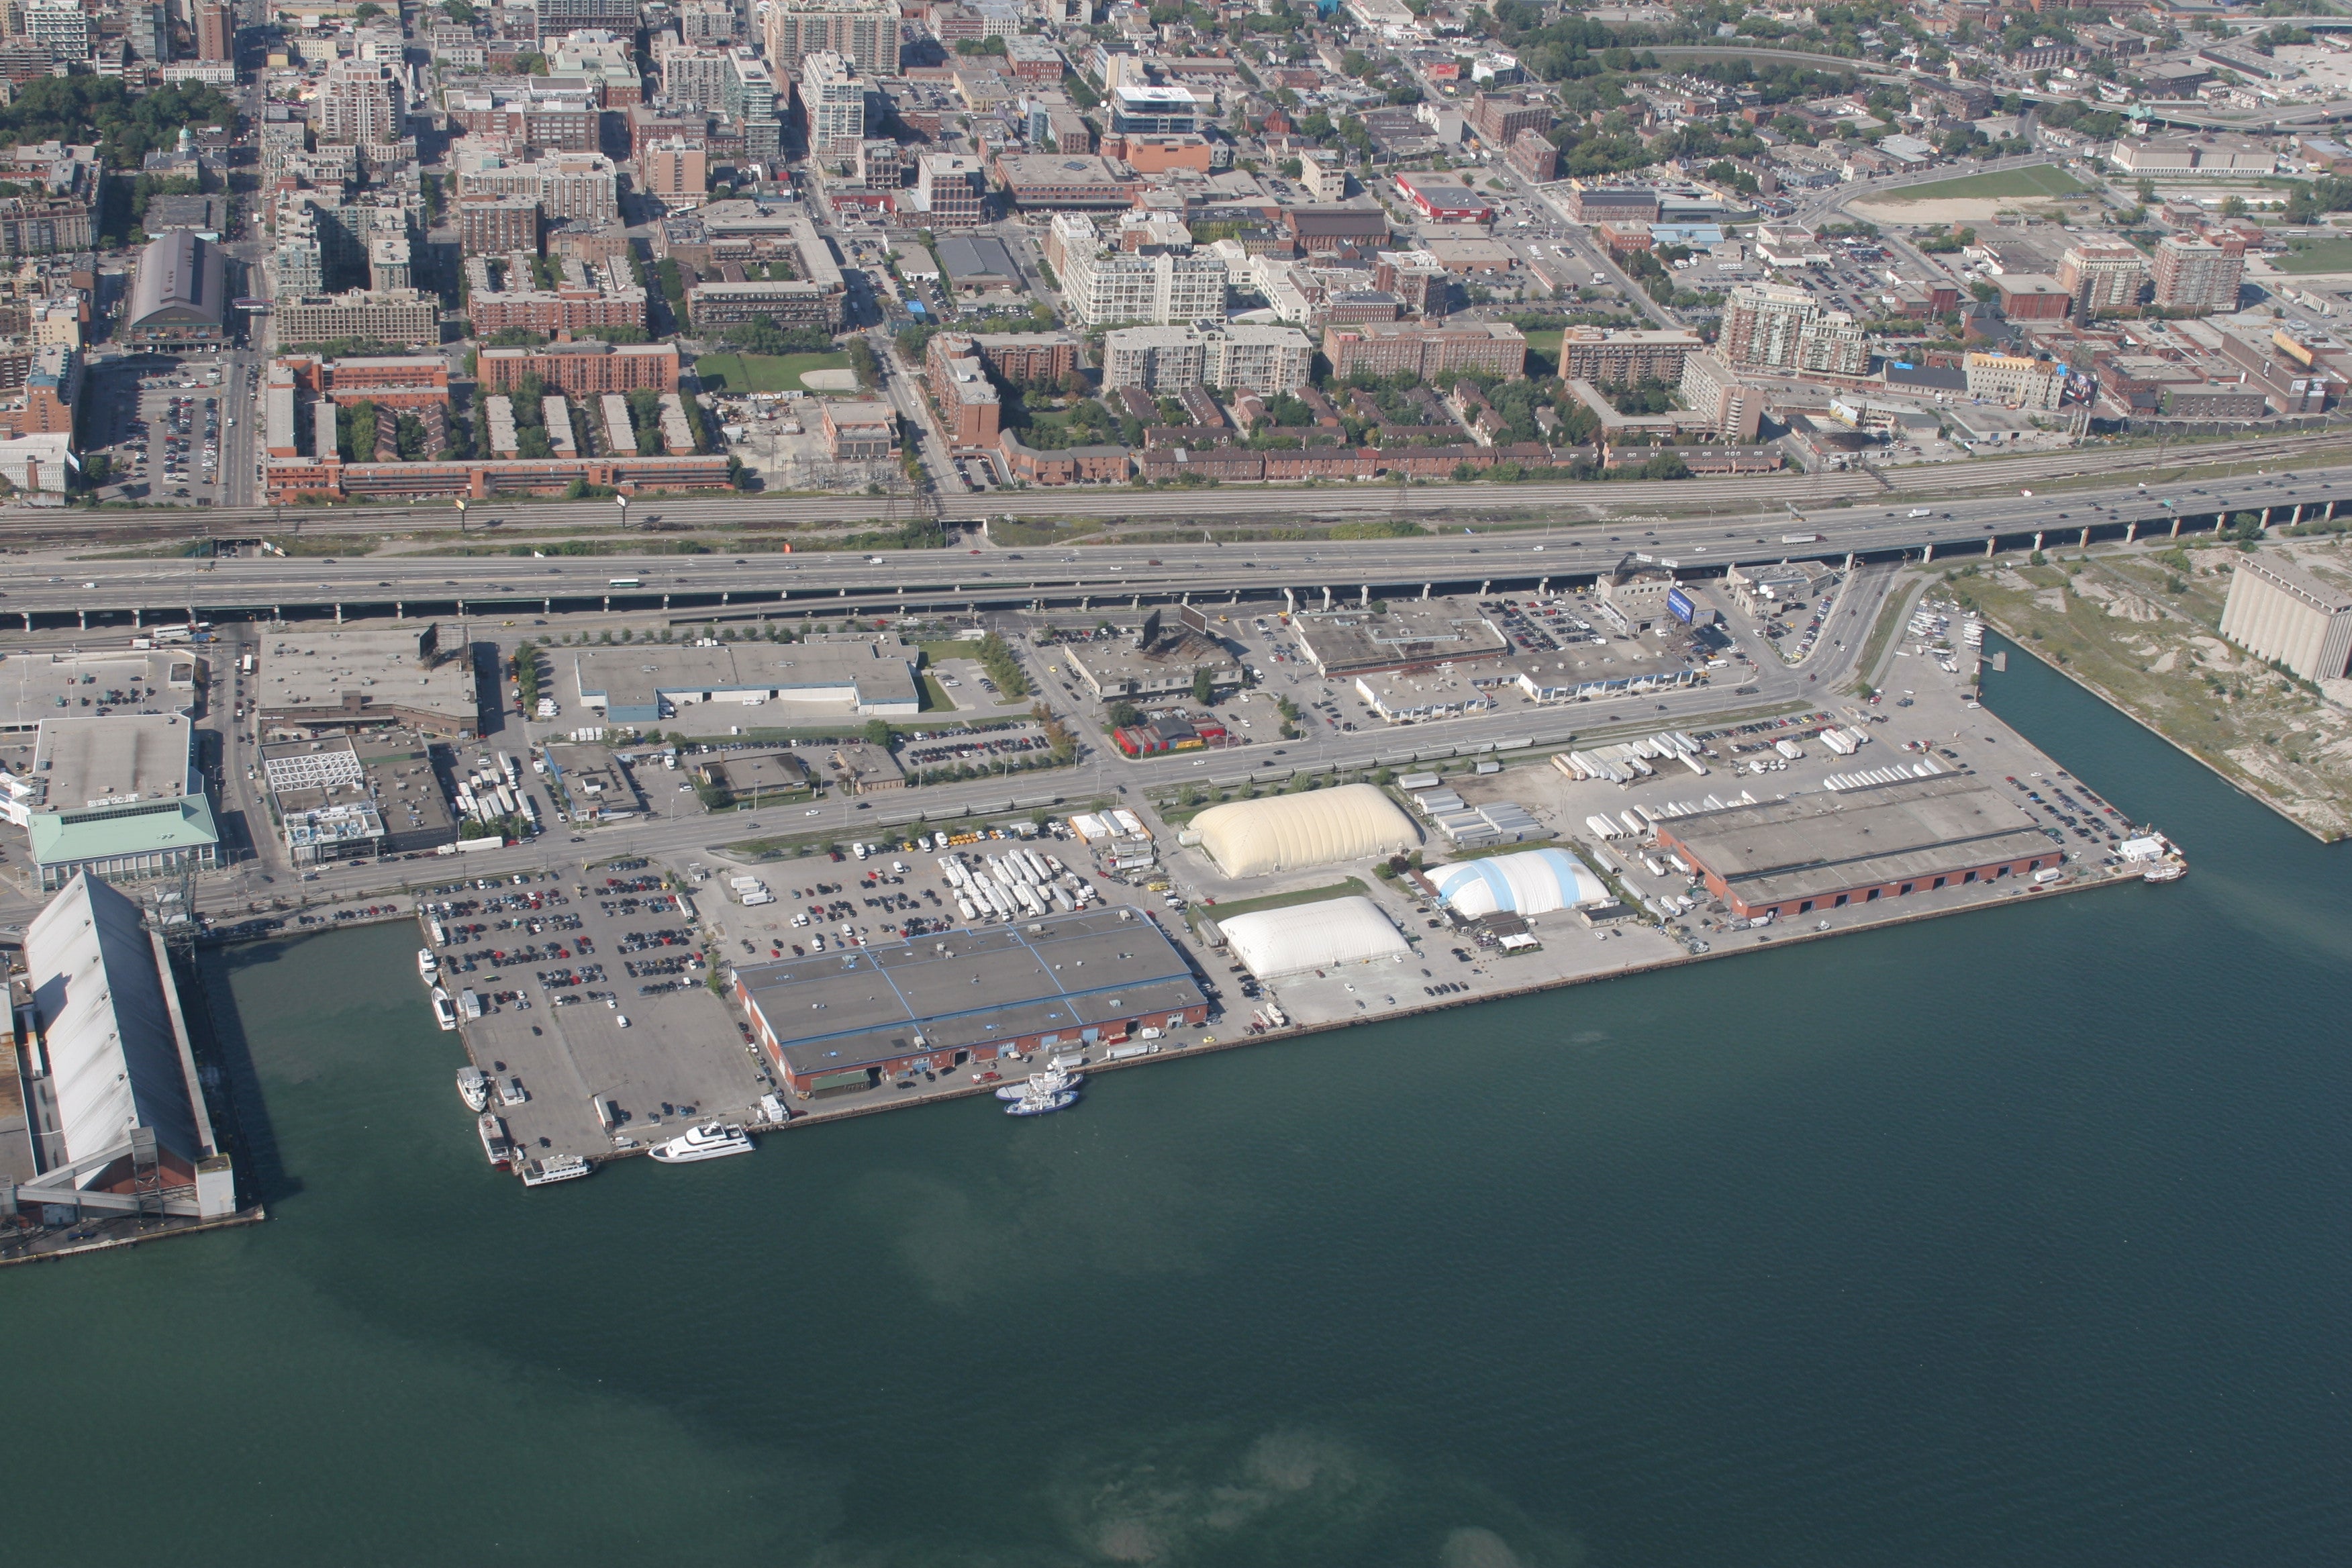 Bird's eye view of waterfront lands before revitalization began